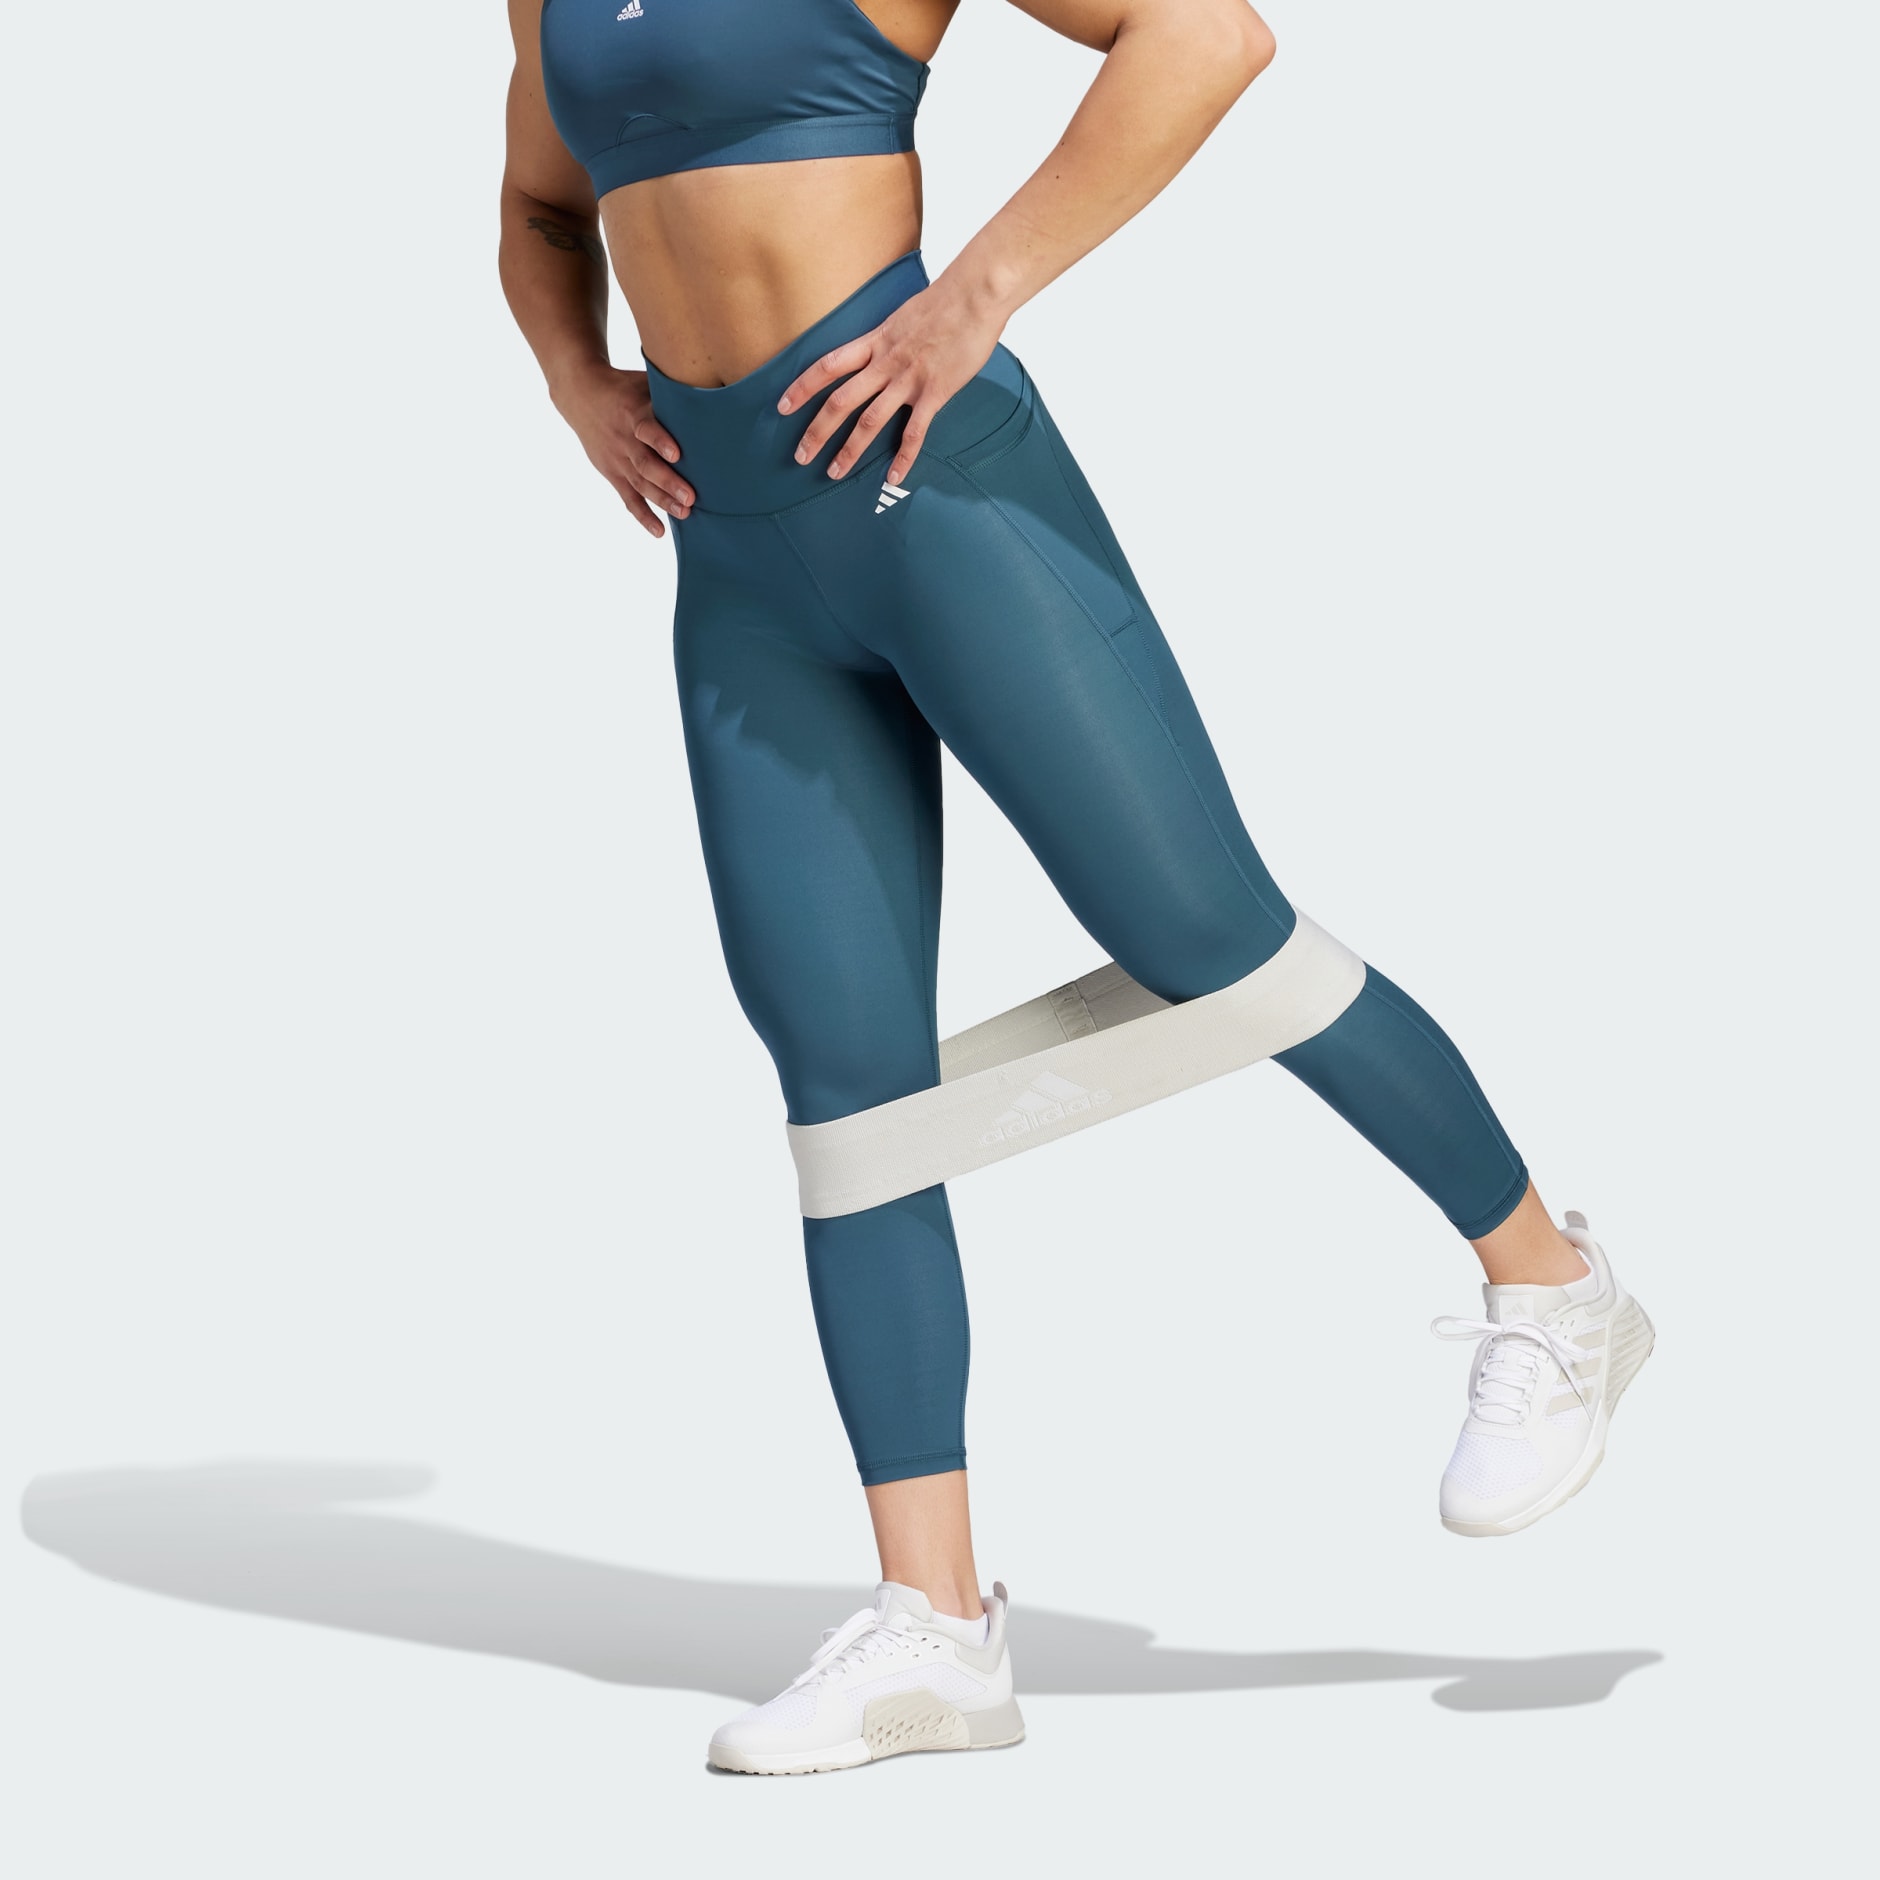 Adidas, Tights & leggings, Womens sports clothing